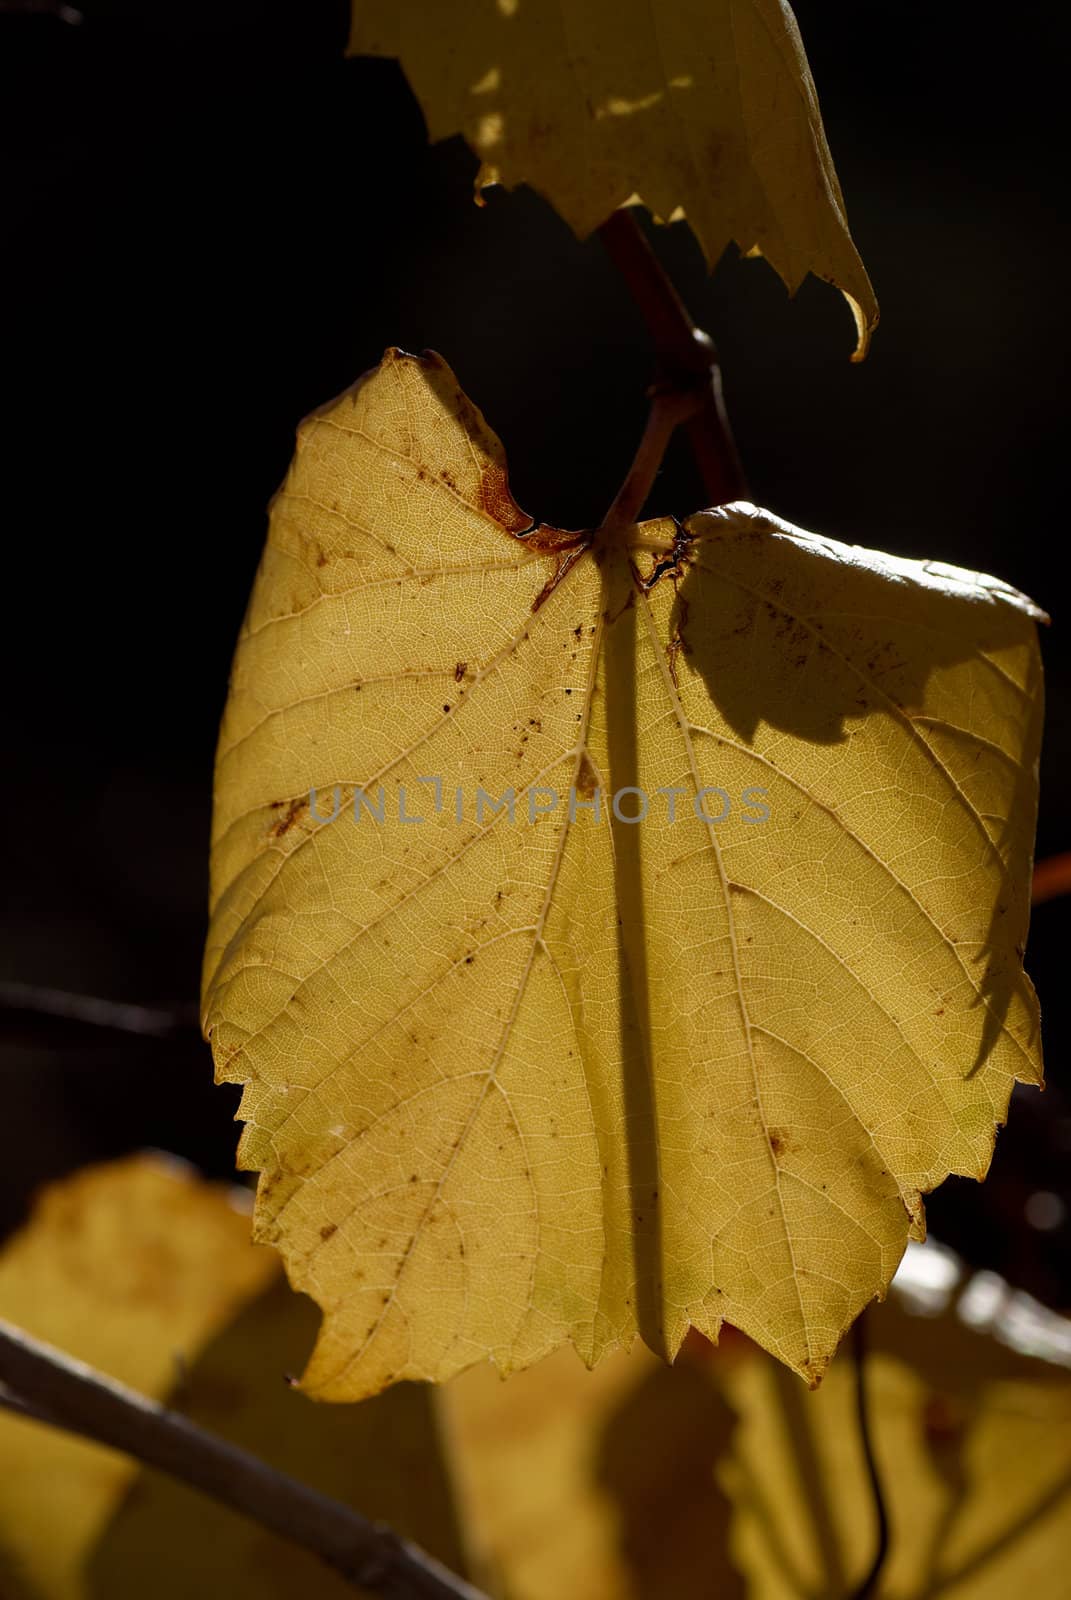 Yellowing vine leaf in afternoon sunshine, autumn background